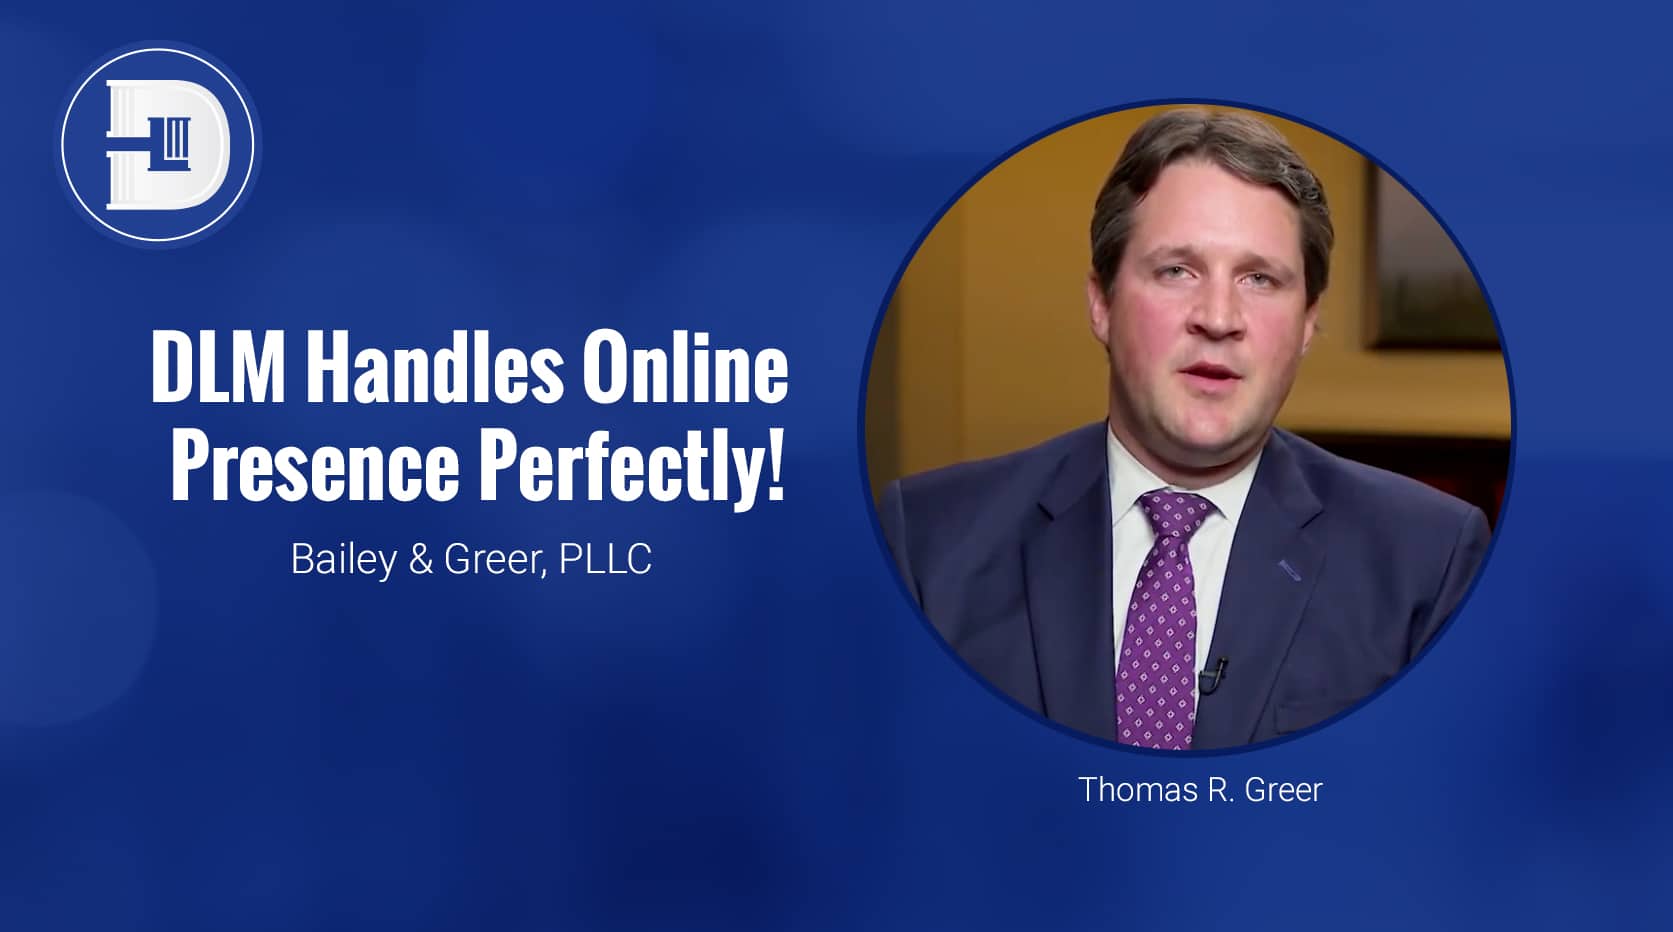 DLM Handles Online Presence Perfectly! - Thomas R. Greer